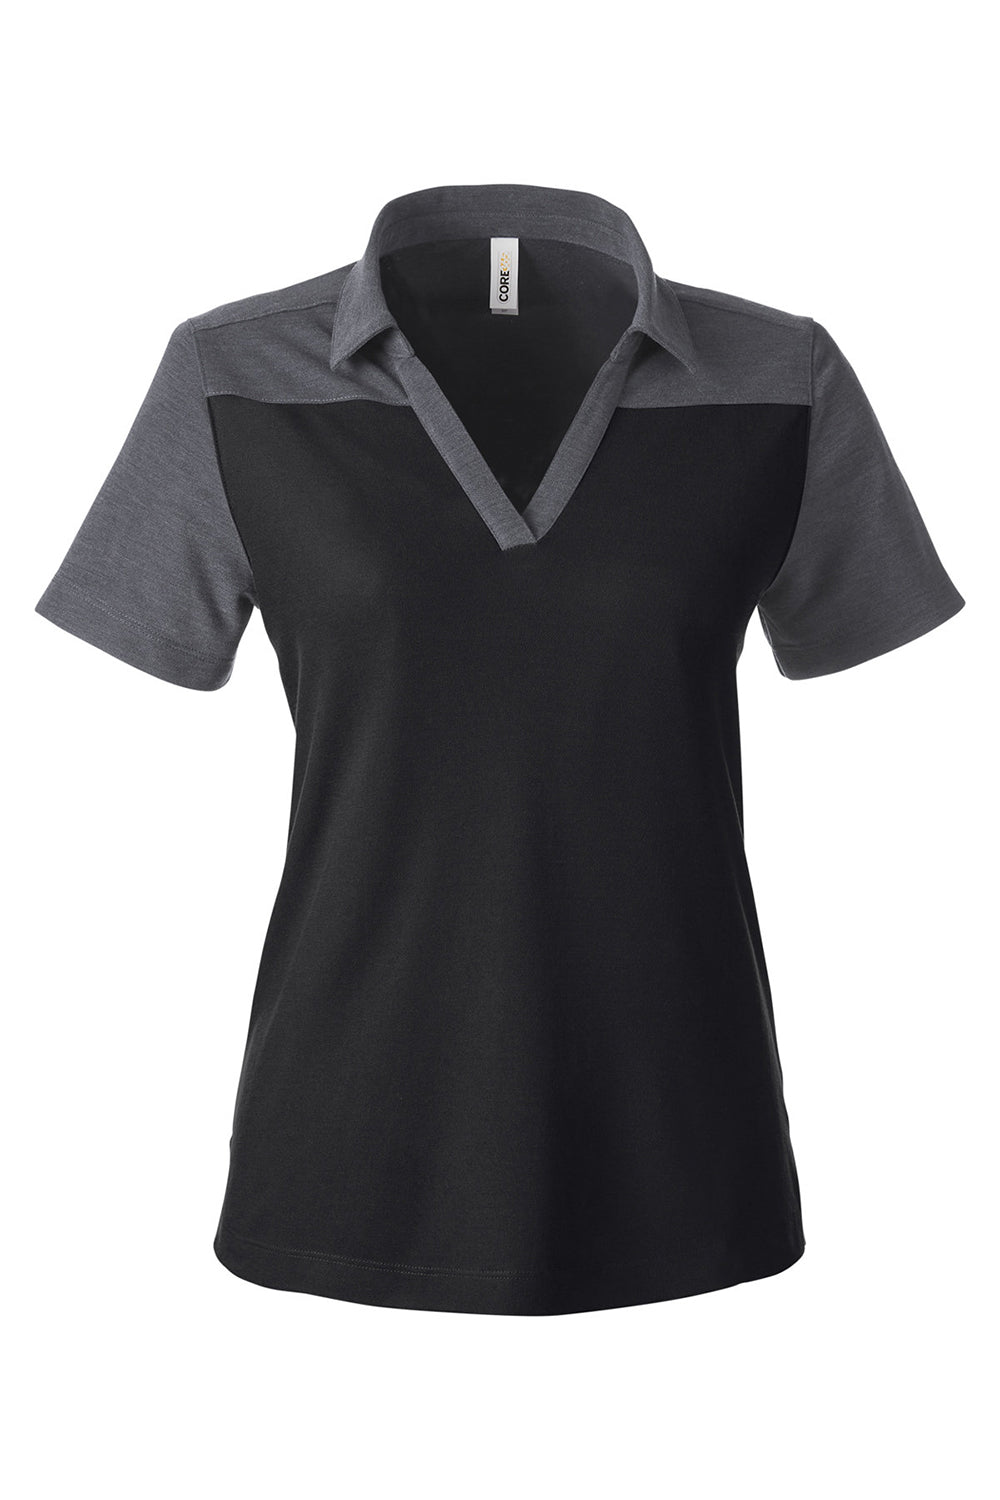 Core 365 CE112CW Mens Fusion ChromaSoft Performance Moisture Wicking Colorblock Short Sleeve Polo Shirt Black/Heather Carbon Grey Flat Front